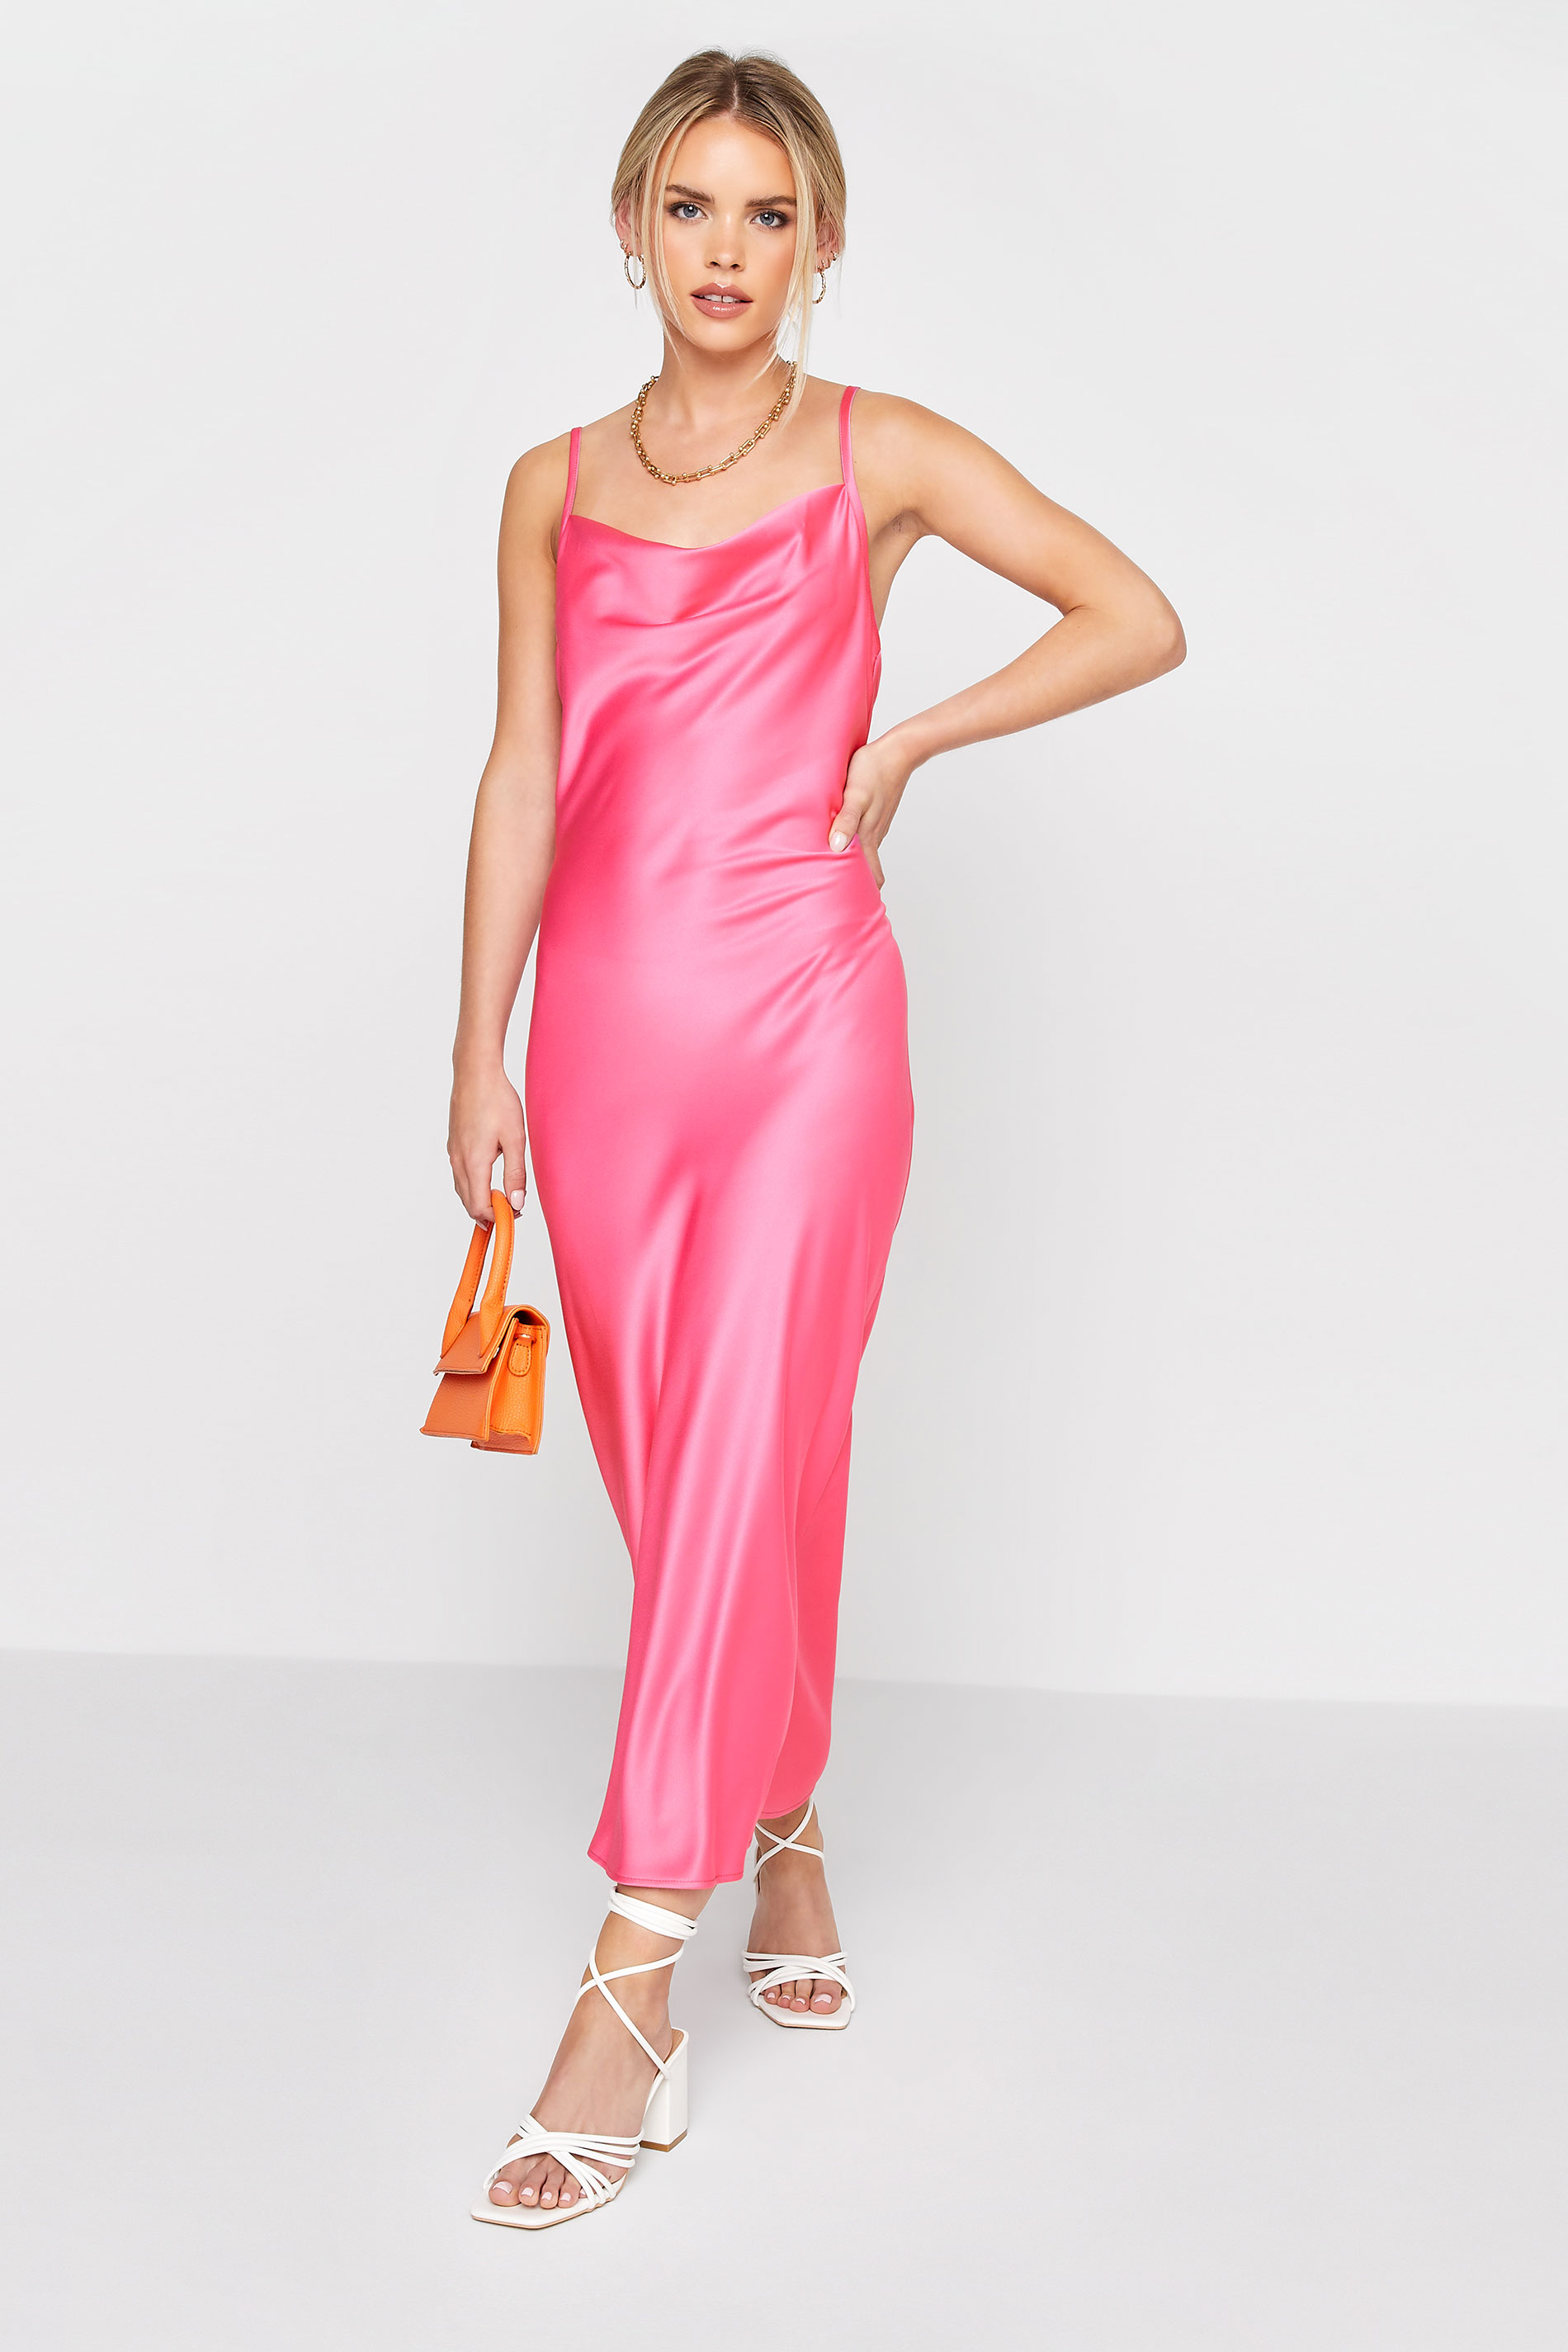 Petite Hot Pink Satin Slip Dress | PixieGirl 2